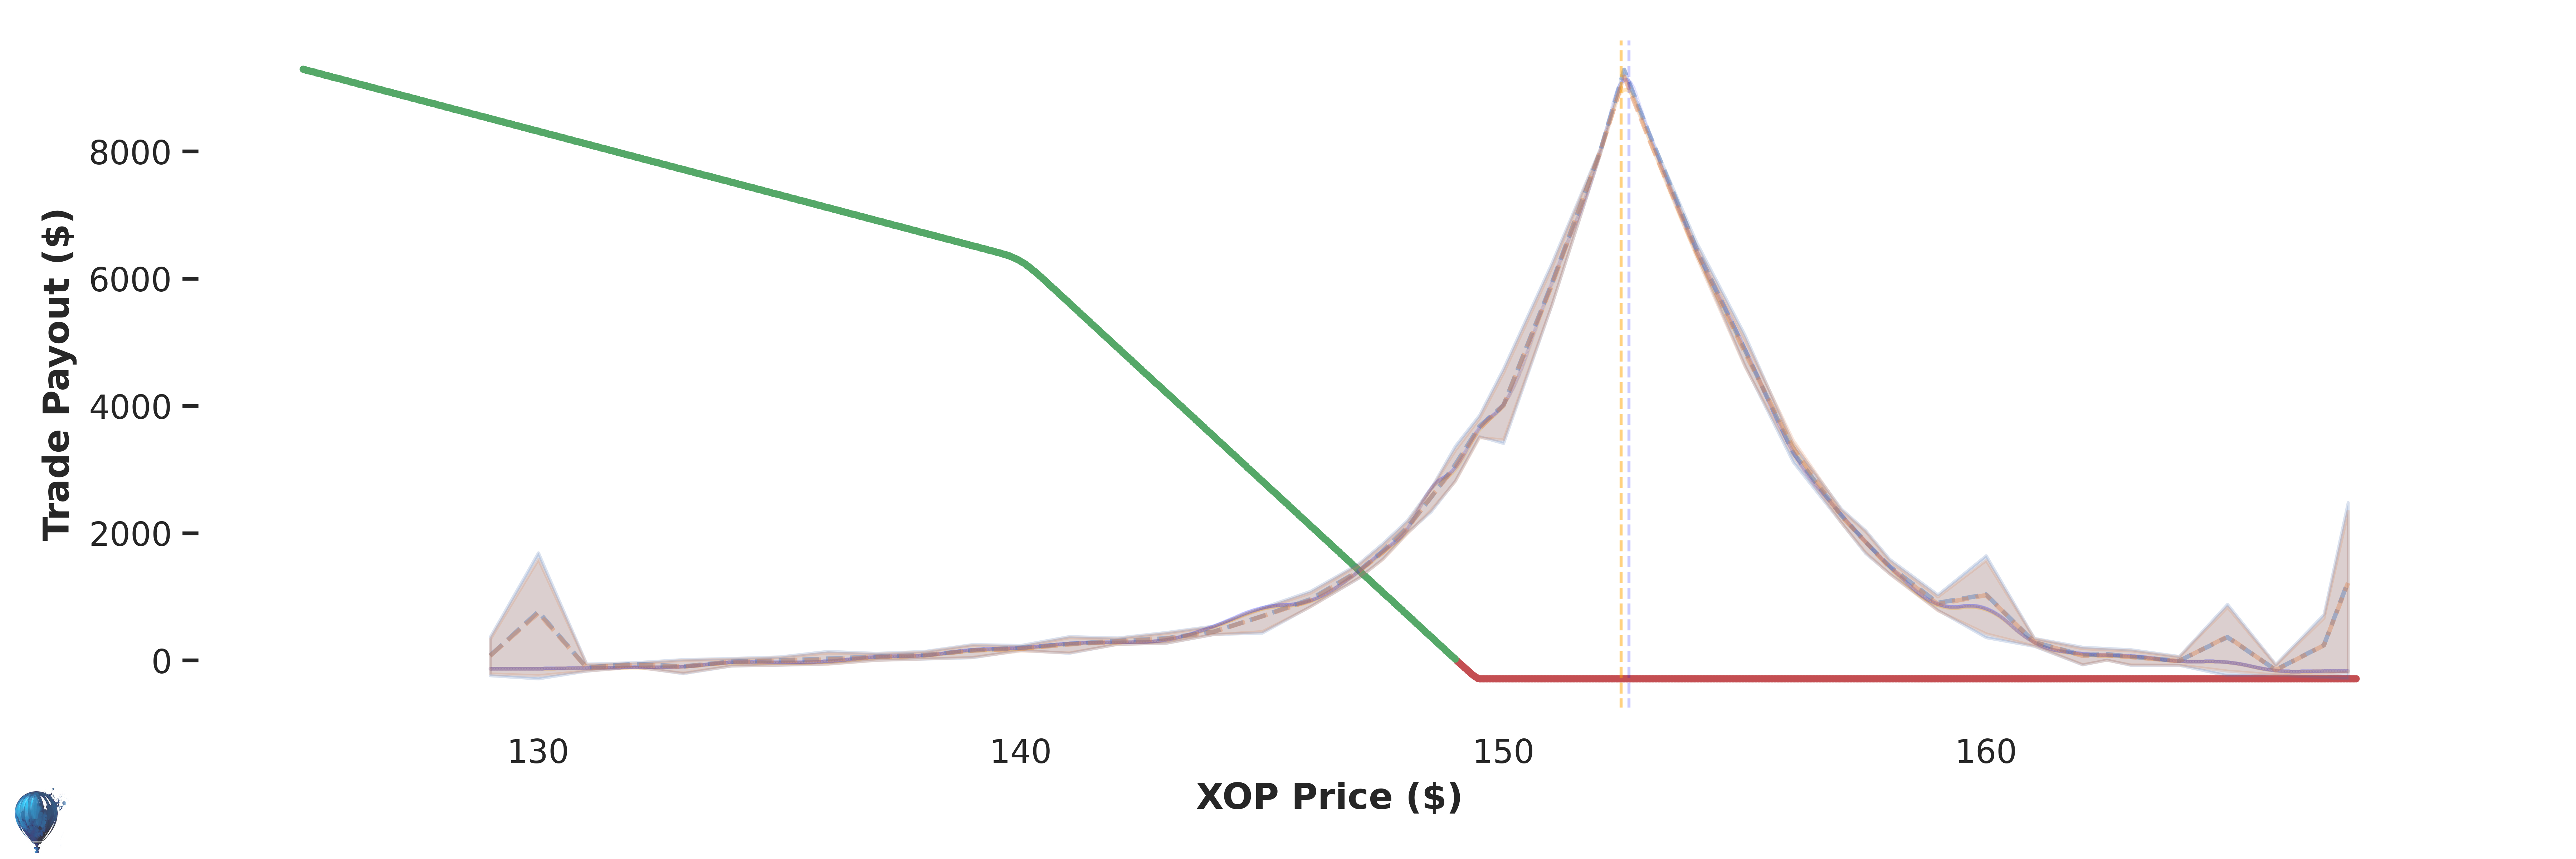 XOP trade payout at expiration